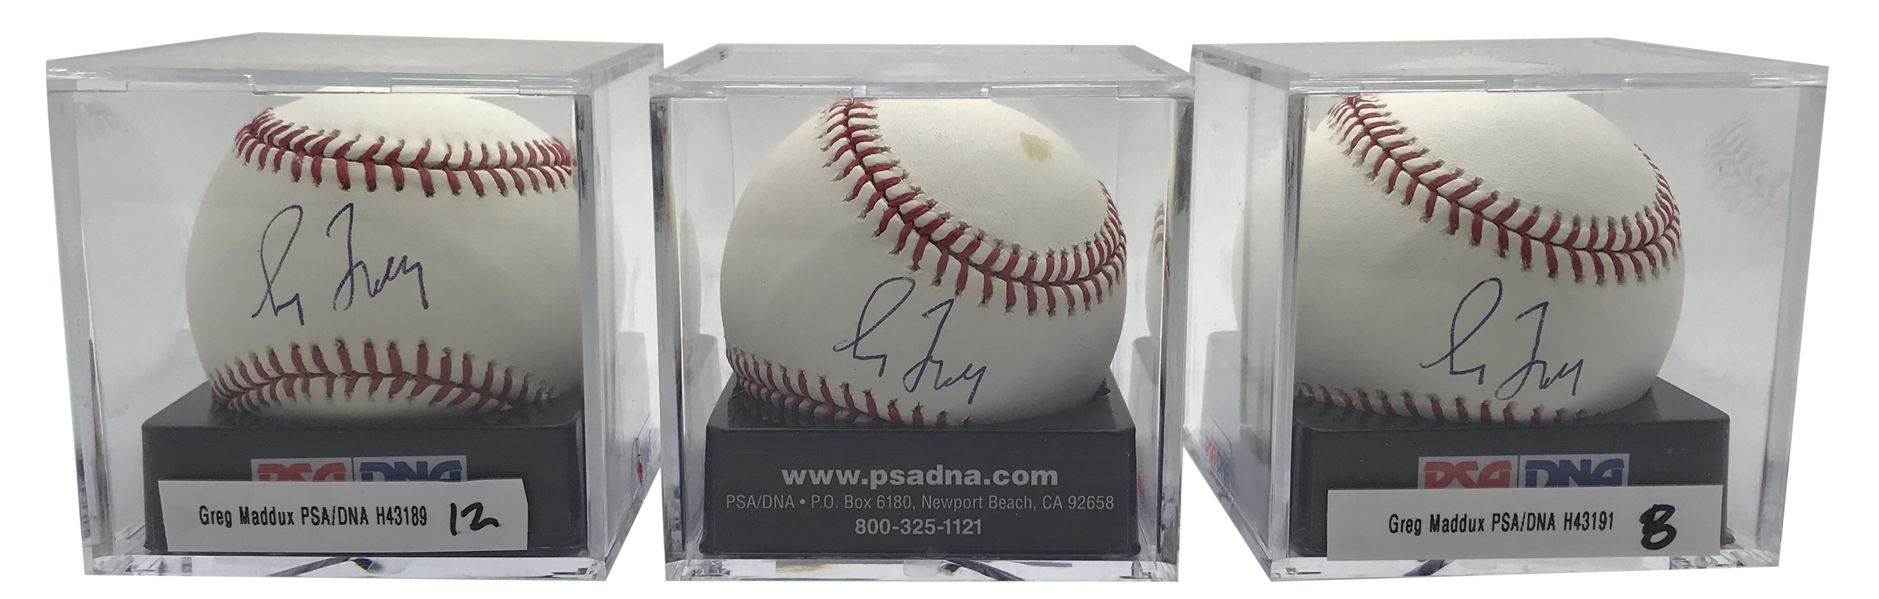 Greg Maddux Lot of Six (6) Signed OML Baseballs PSA/DNA Graded MINT 9.5!